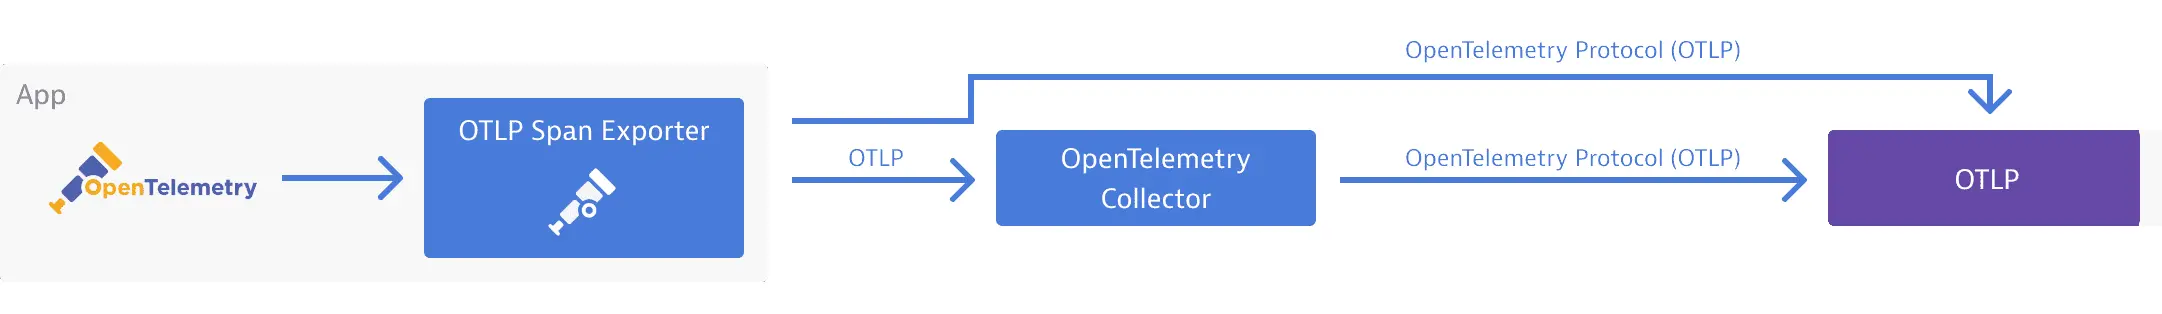 OpenTelemetry architecture